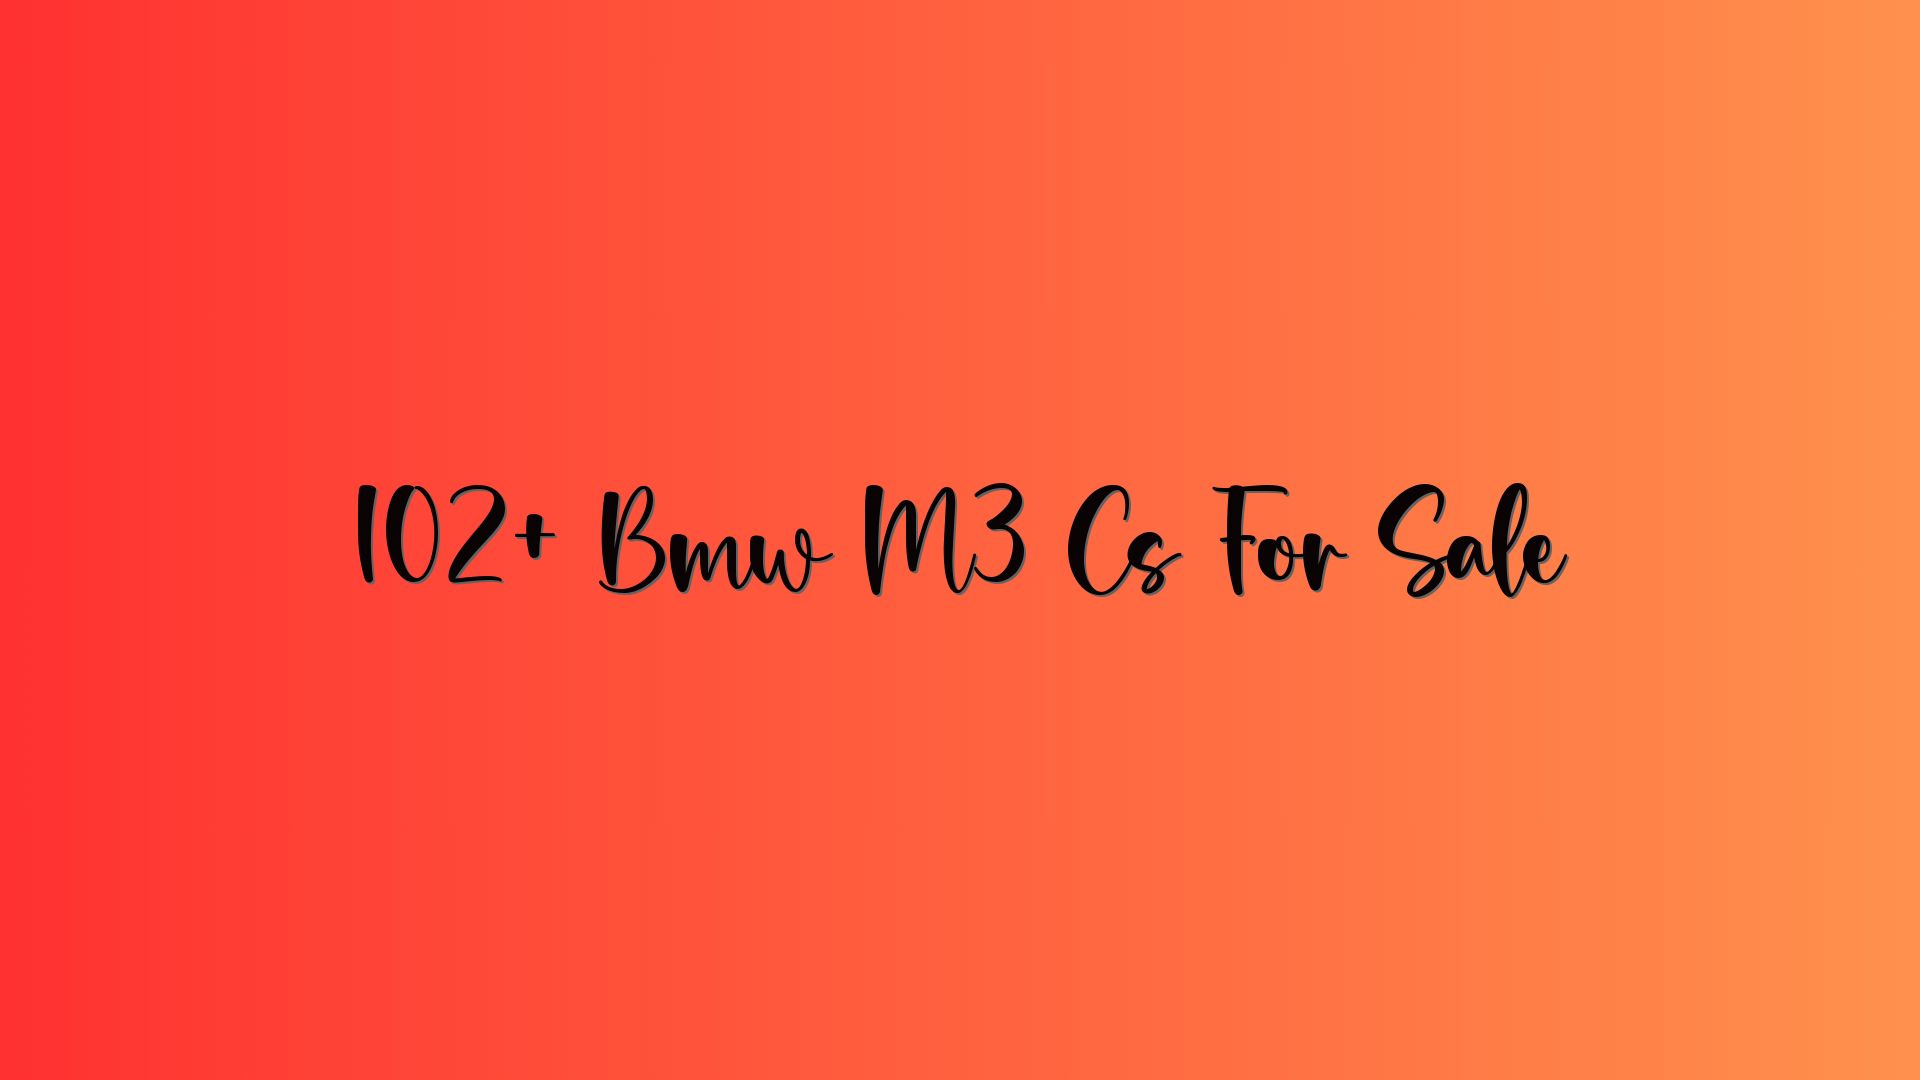 102+ Bmw M3 Cs For Sale